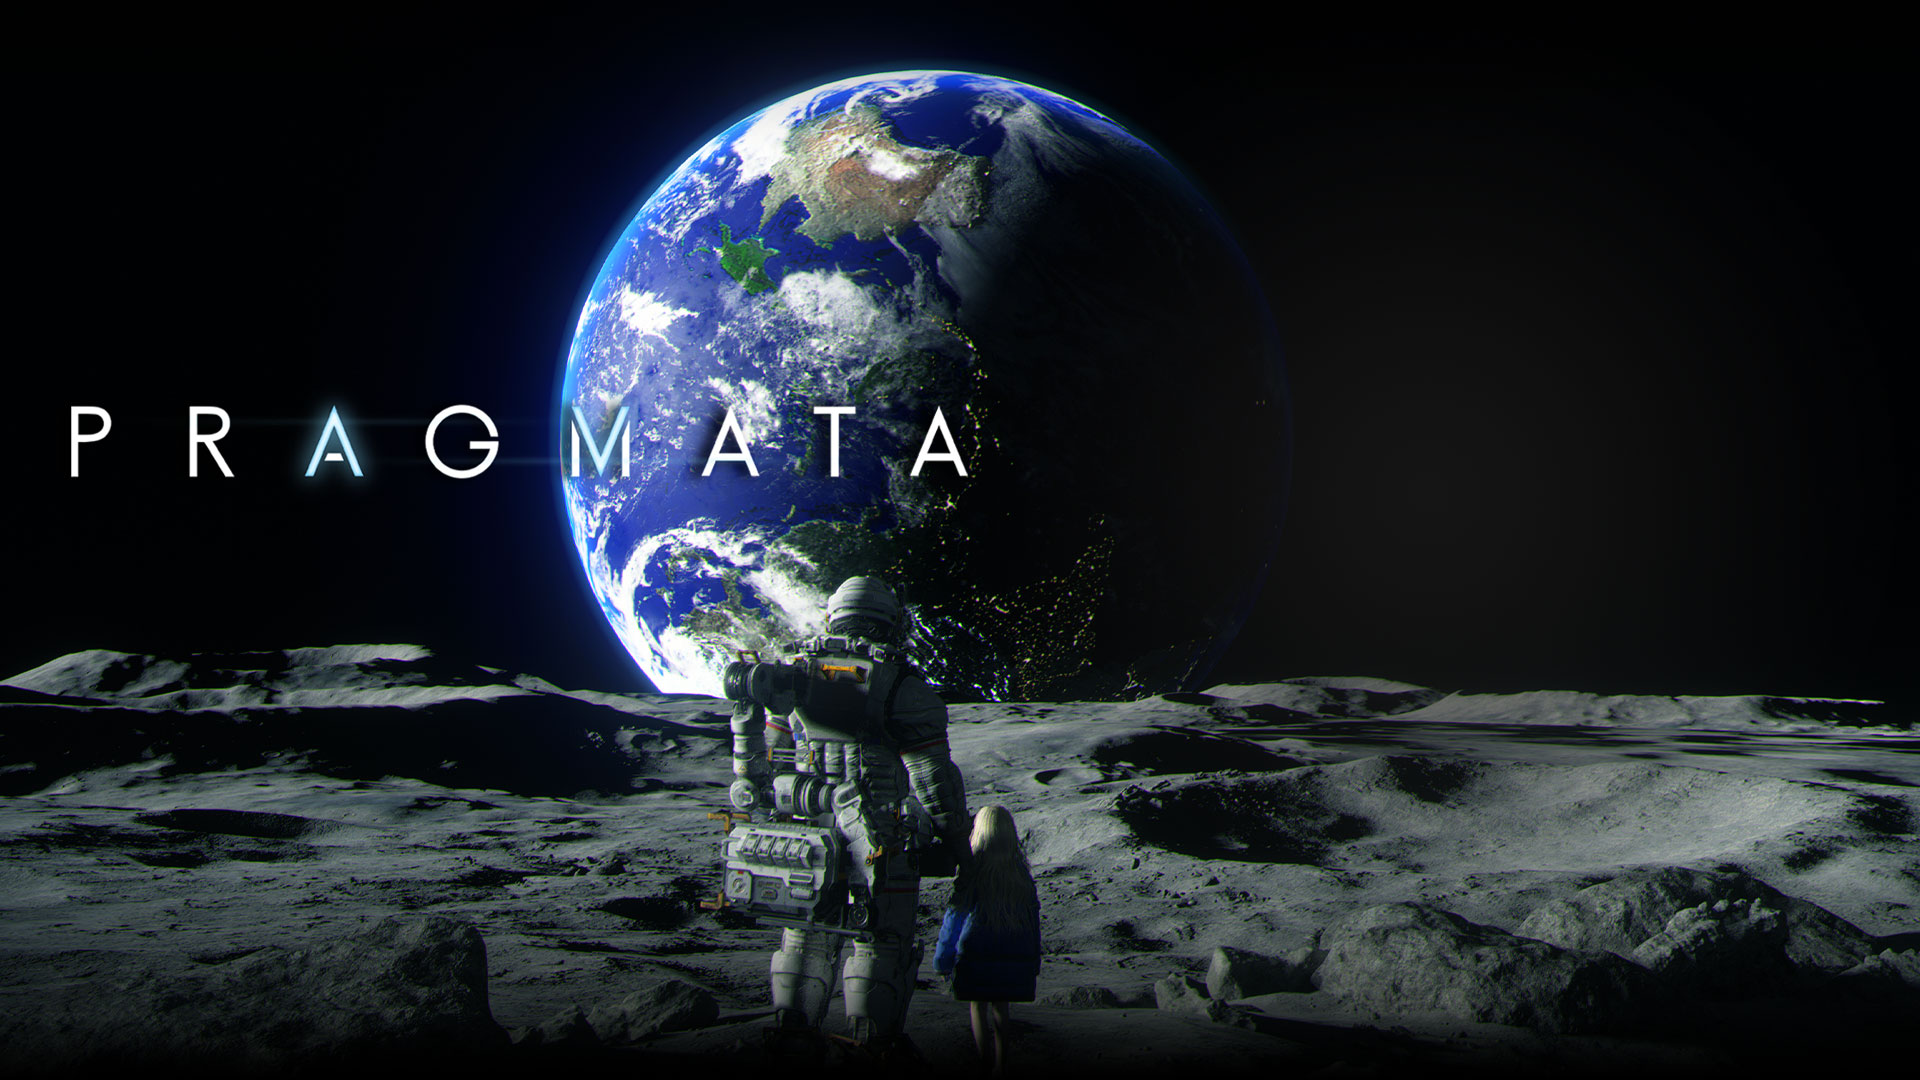 Pragmata, En astronaut og en ung pige kigger på Jorden, mens de står sammen på månen